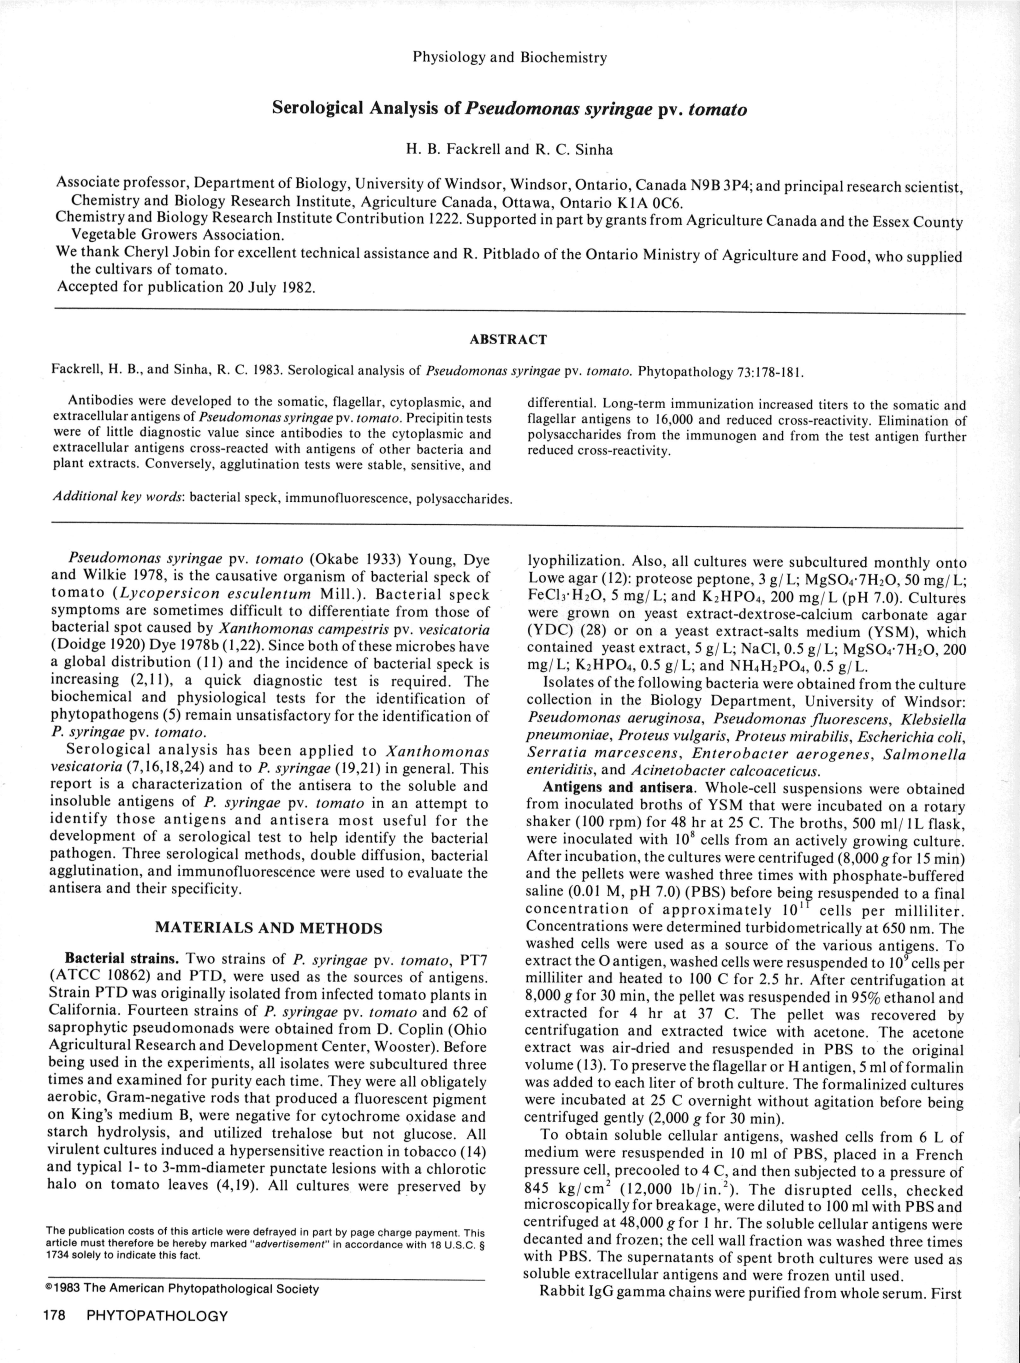 Serological Analysis of Pseudomonas Syringae Pv. Tomato